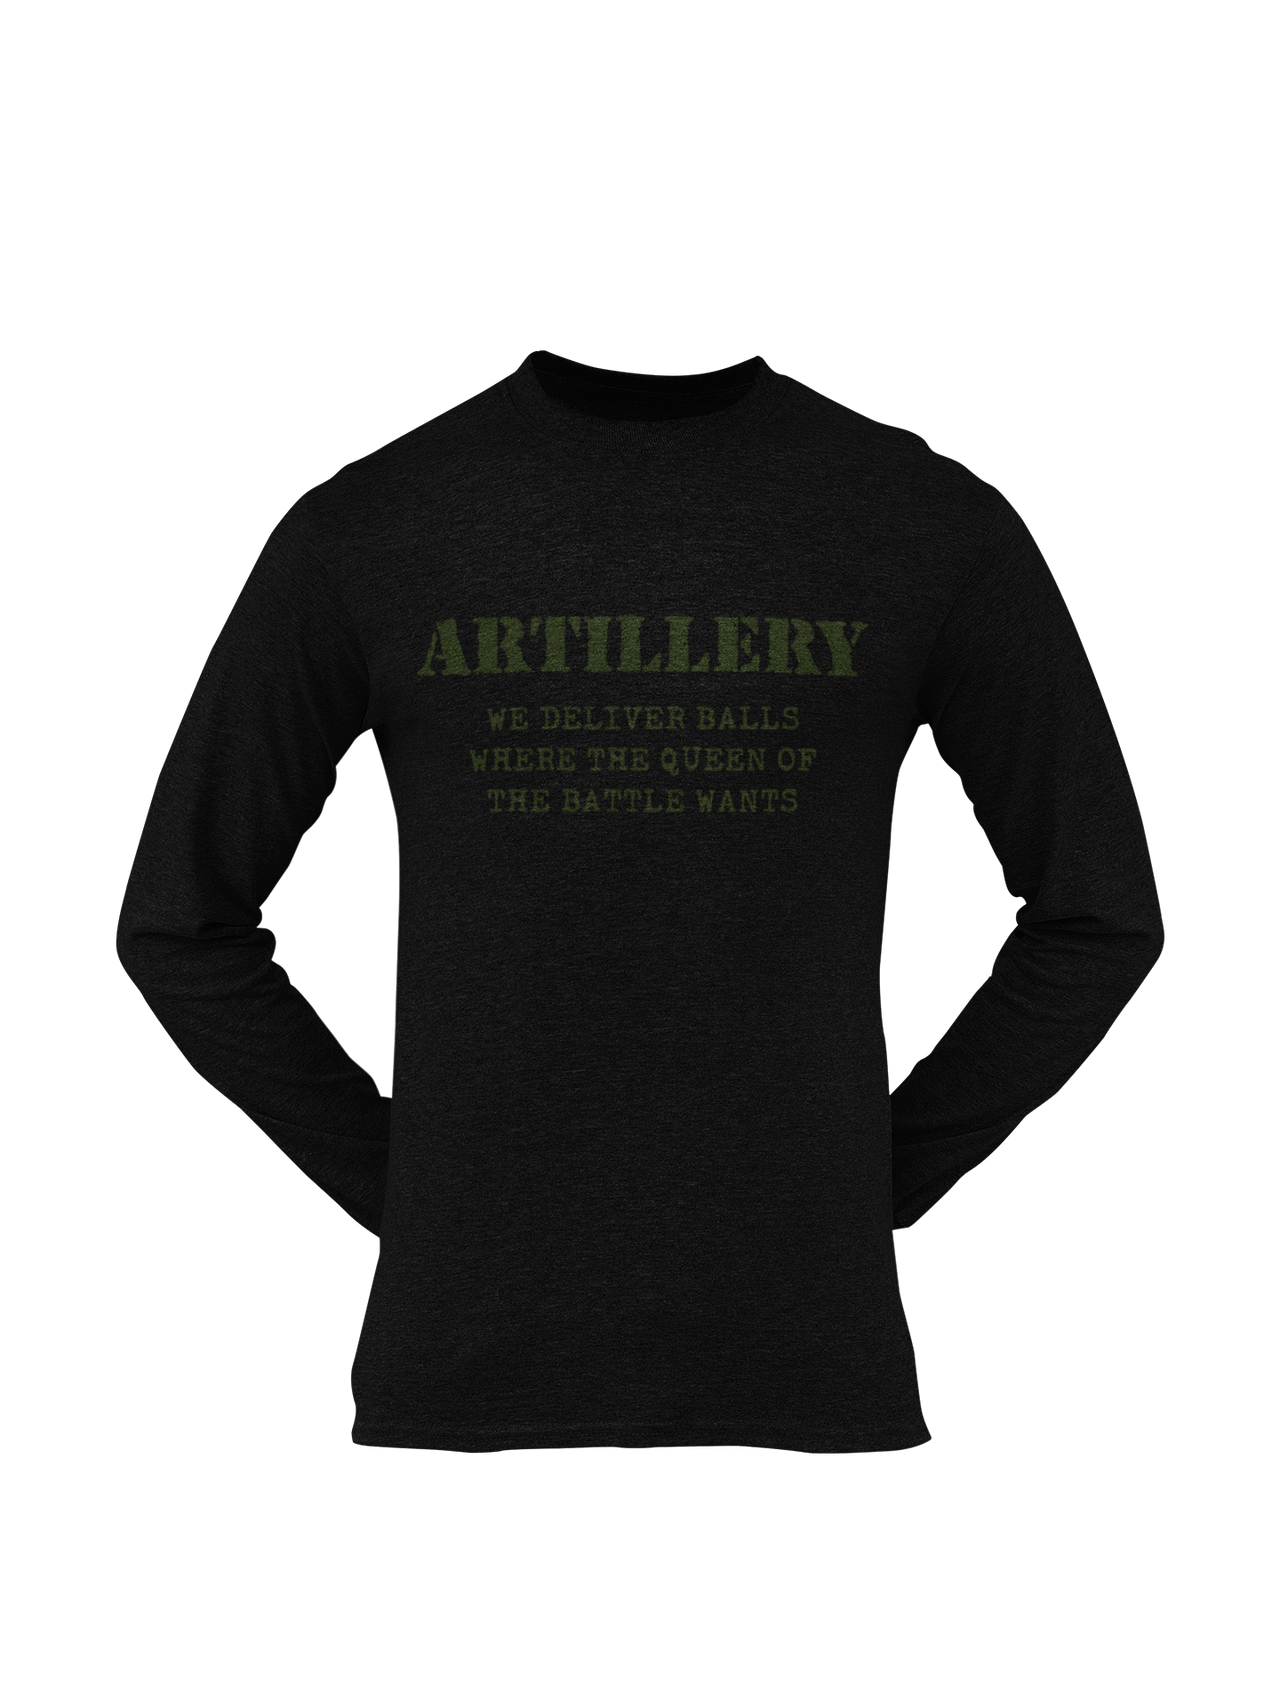 Artillery T-shirt - We Deliver Balls..... (Men)